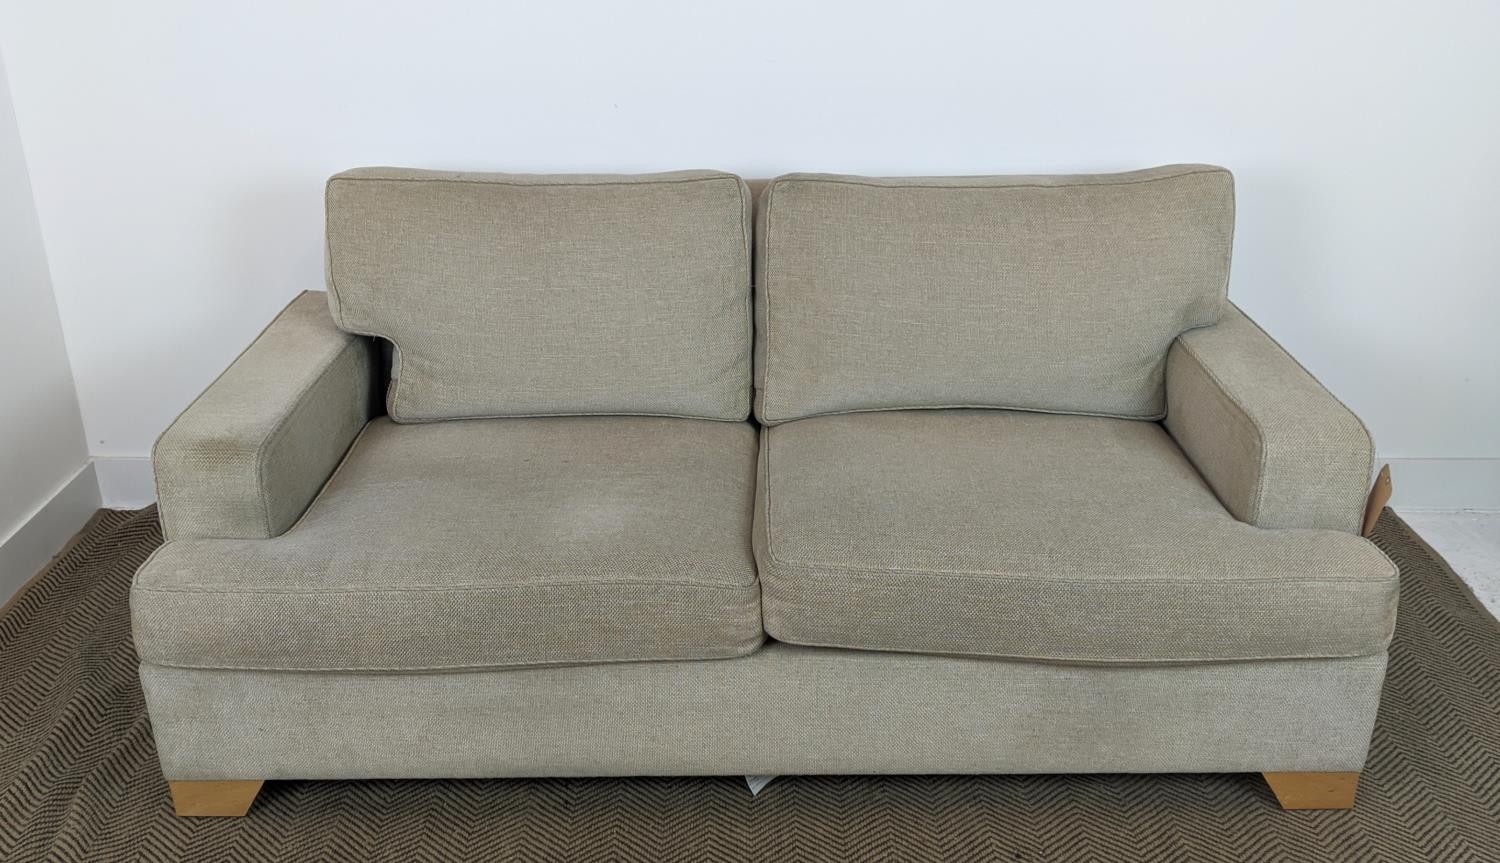 KINGCOME SHERWOOD SOFA, light brown upholstery, 181cm W x 75cm H x 95cm D. - Bild 2 aus 7